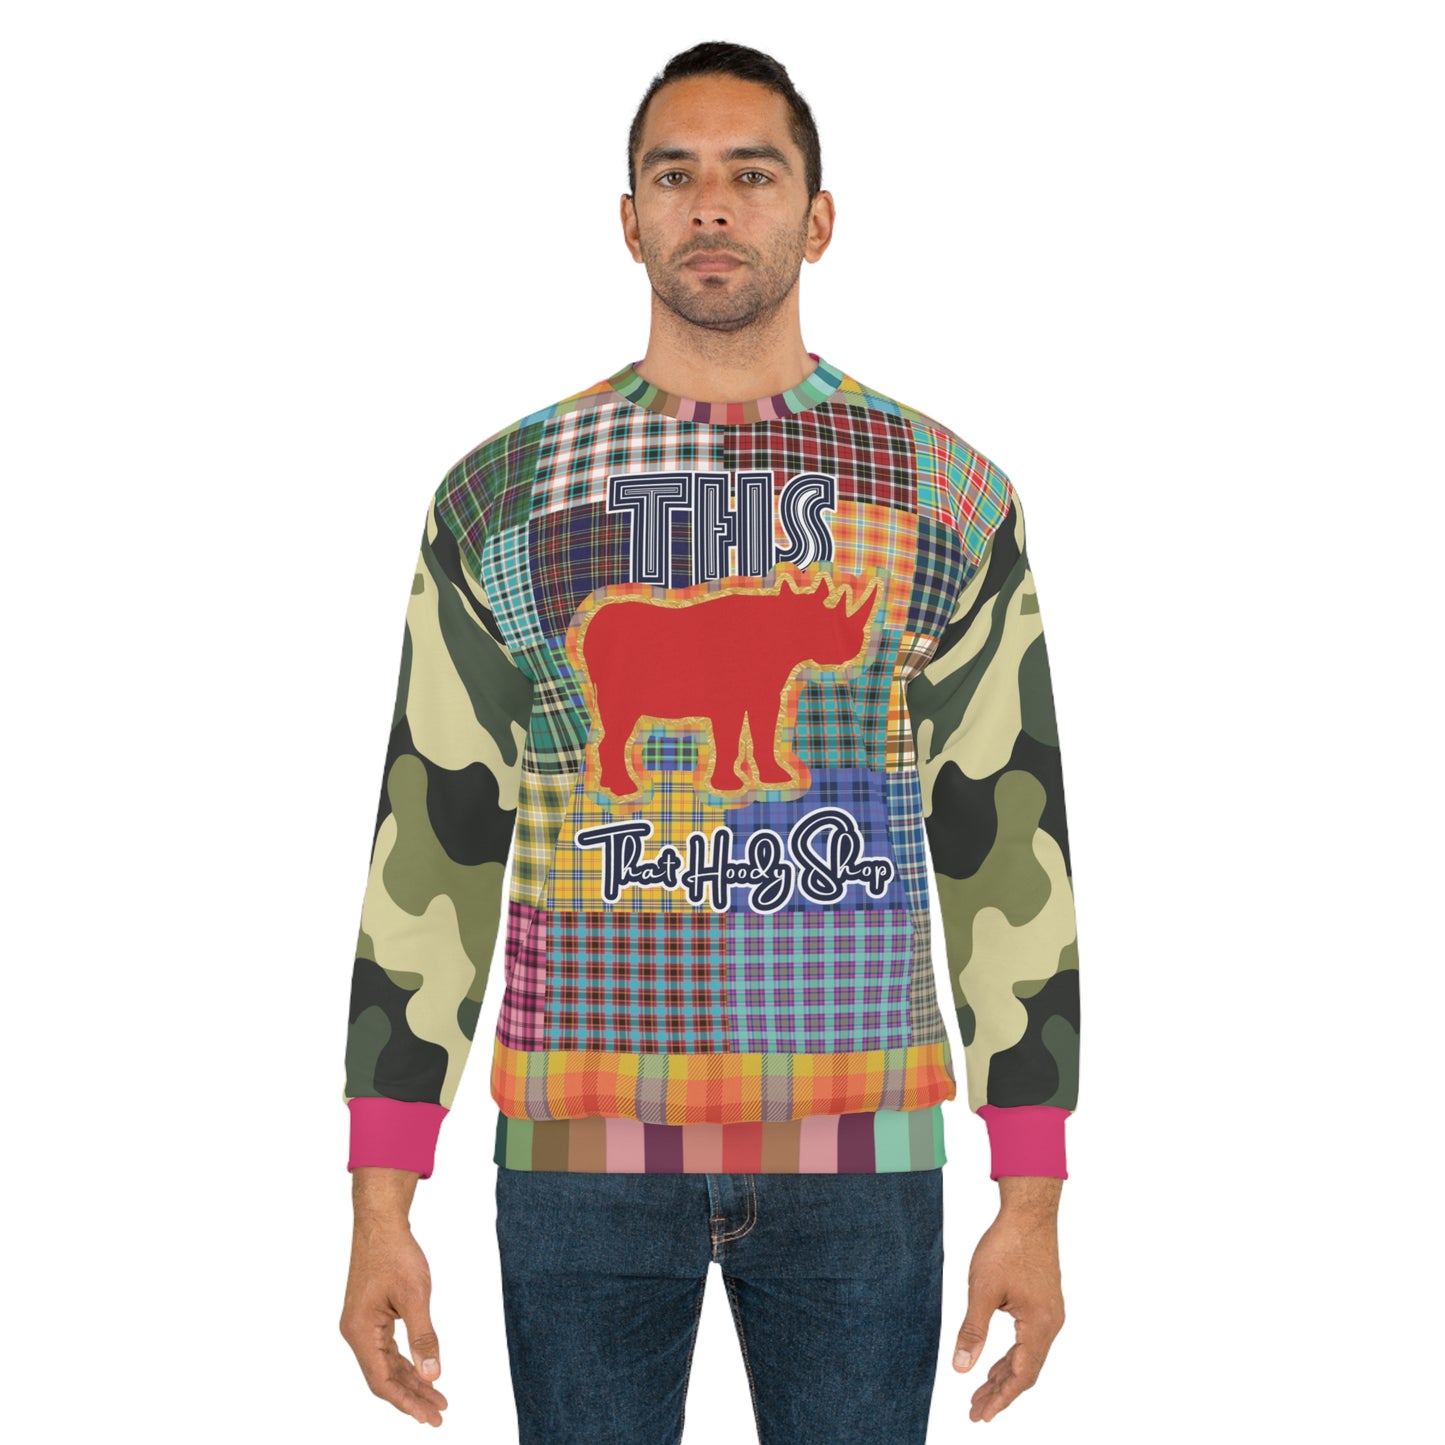 The Preppy Woodsman Plaid Patchwork Rhino Unisex Sweatshirt